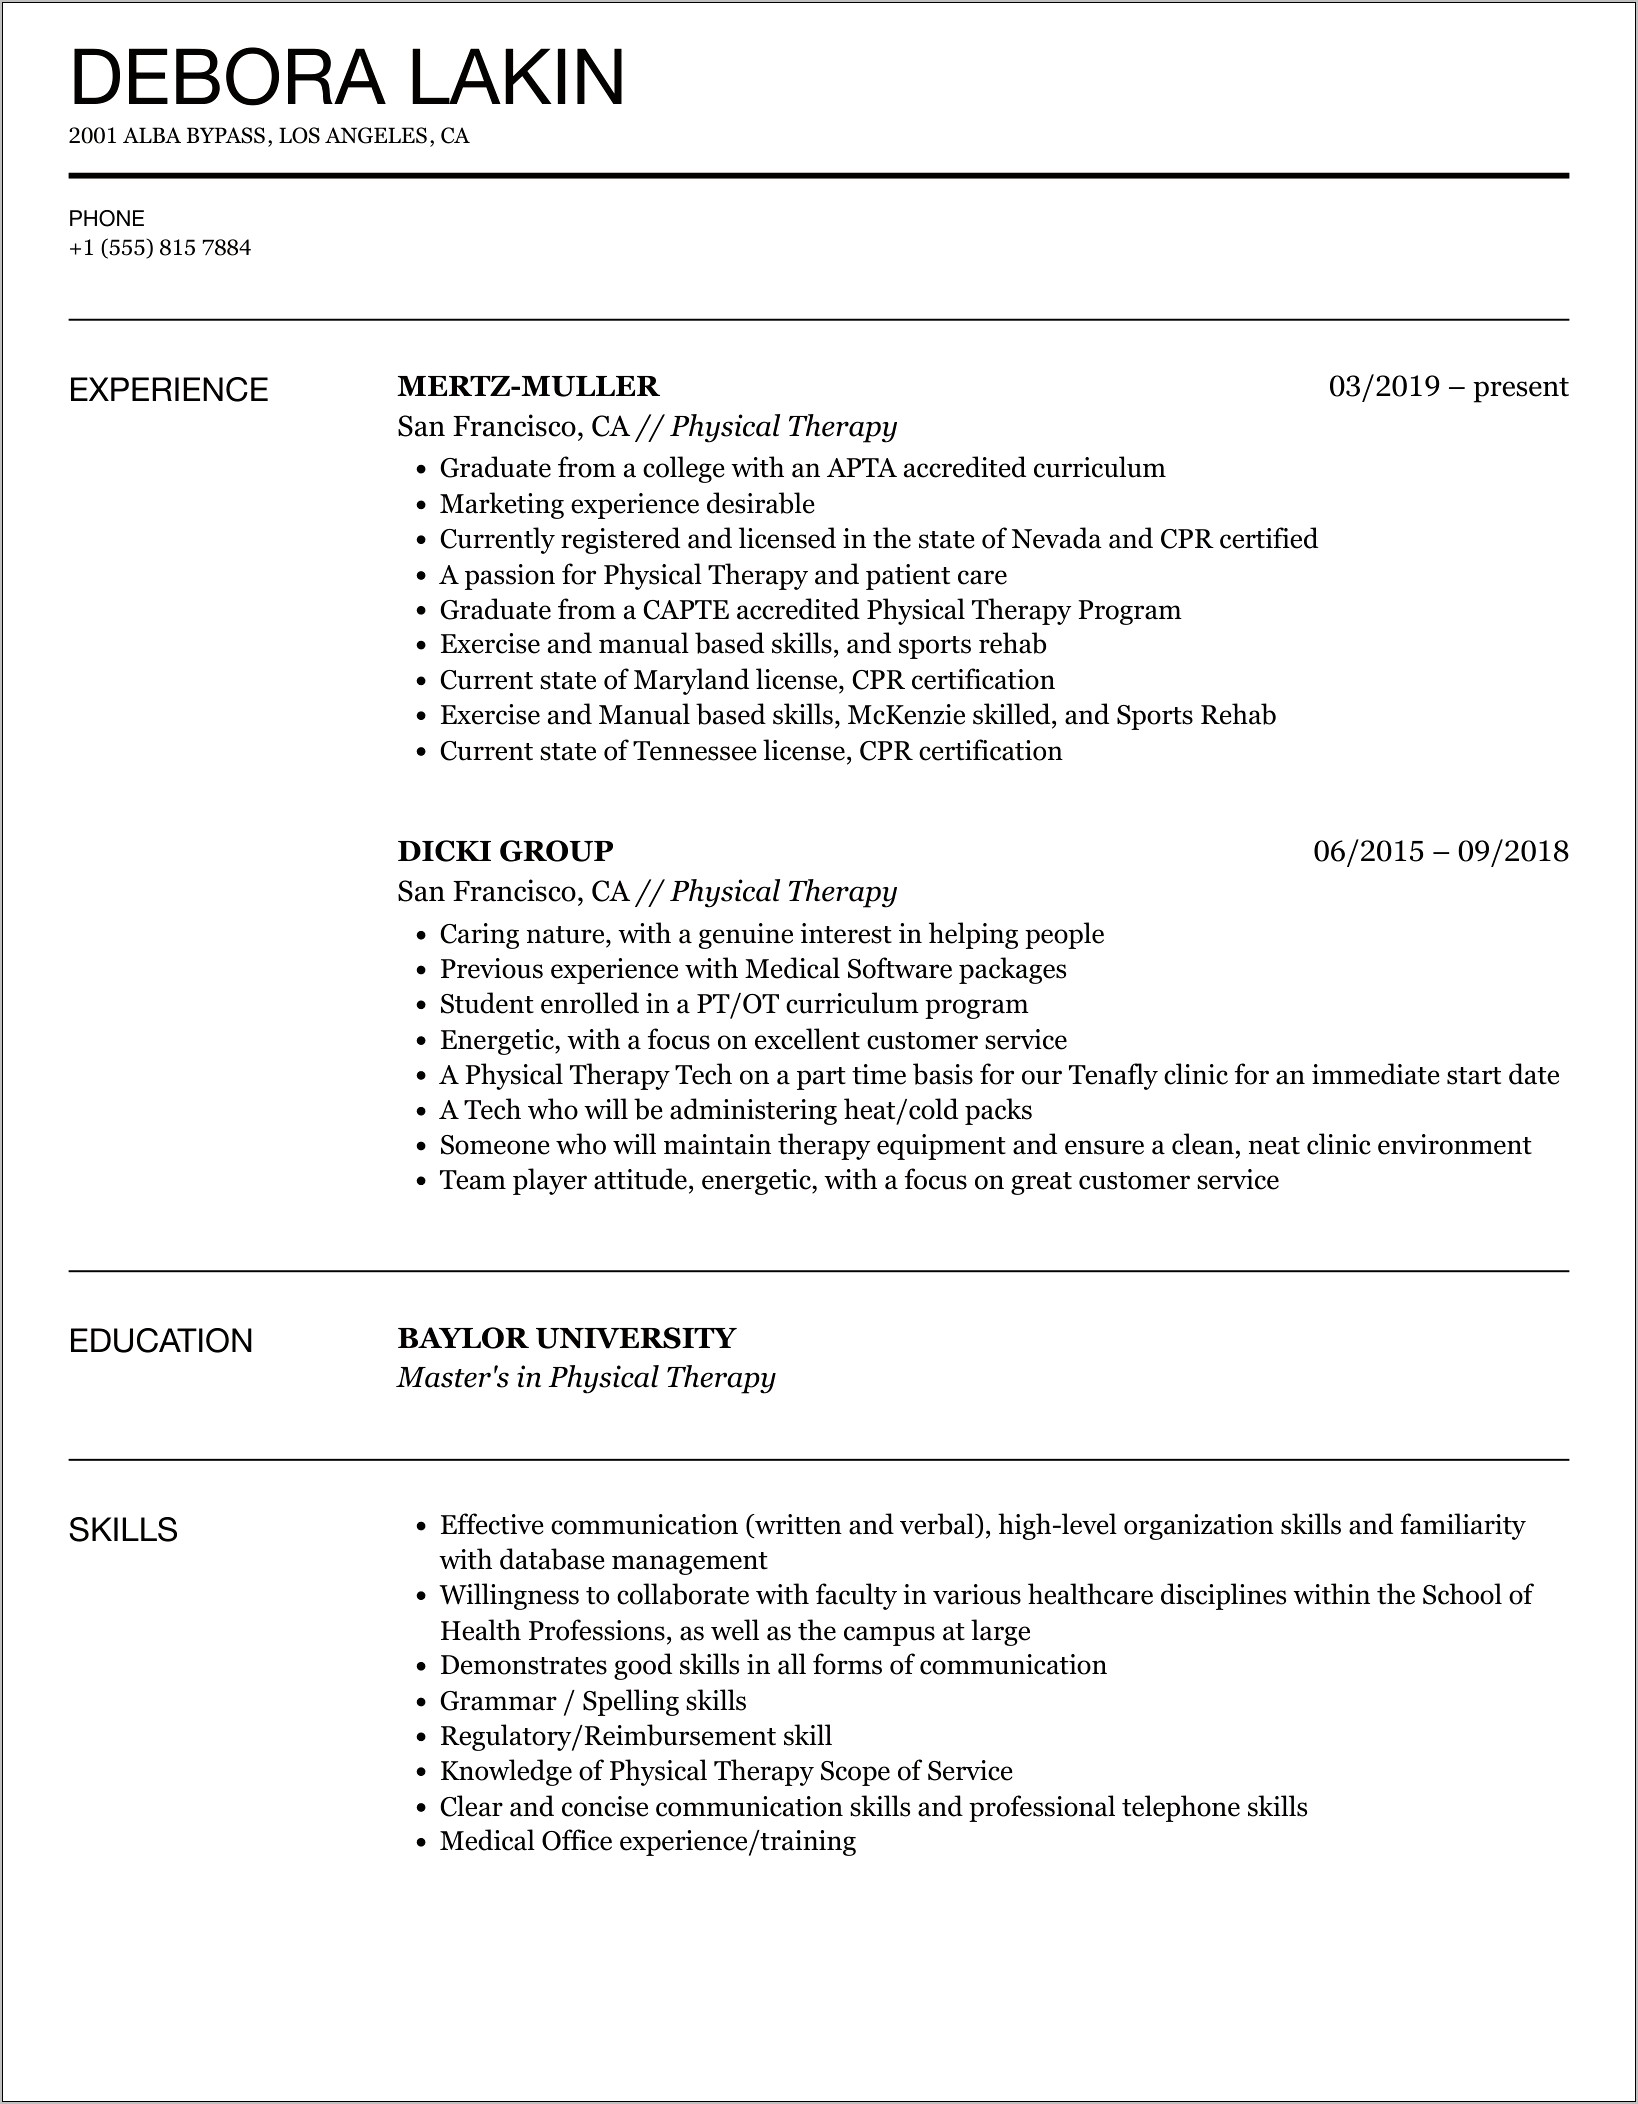 Resume Objective For Pt School